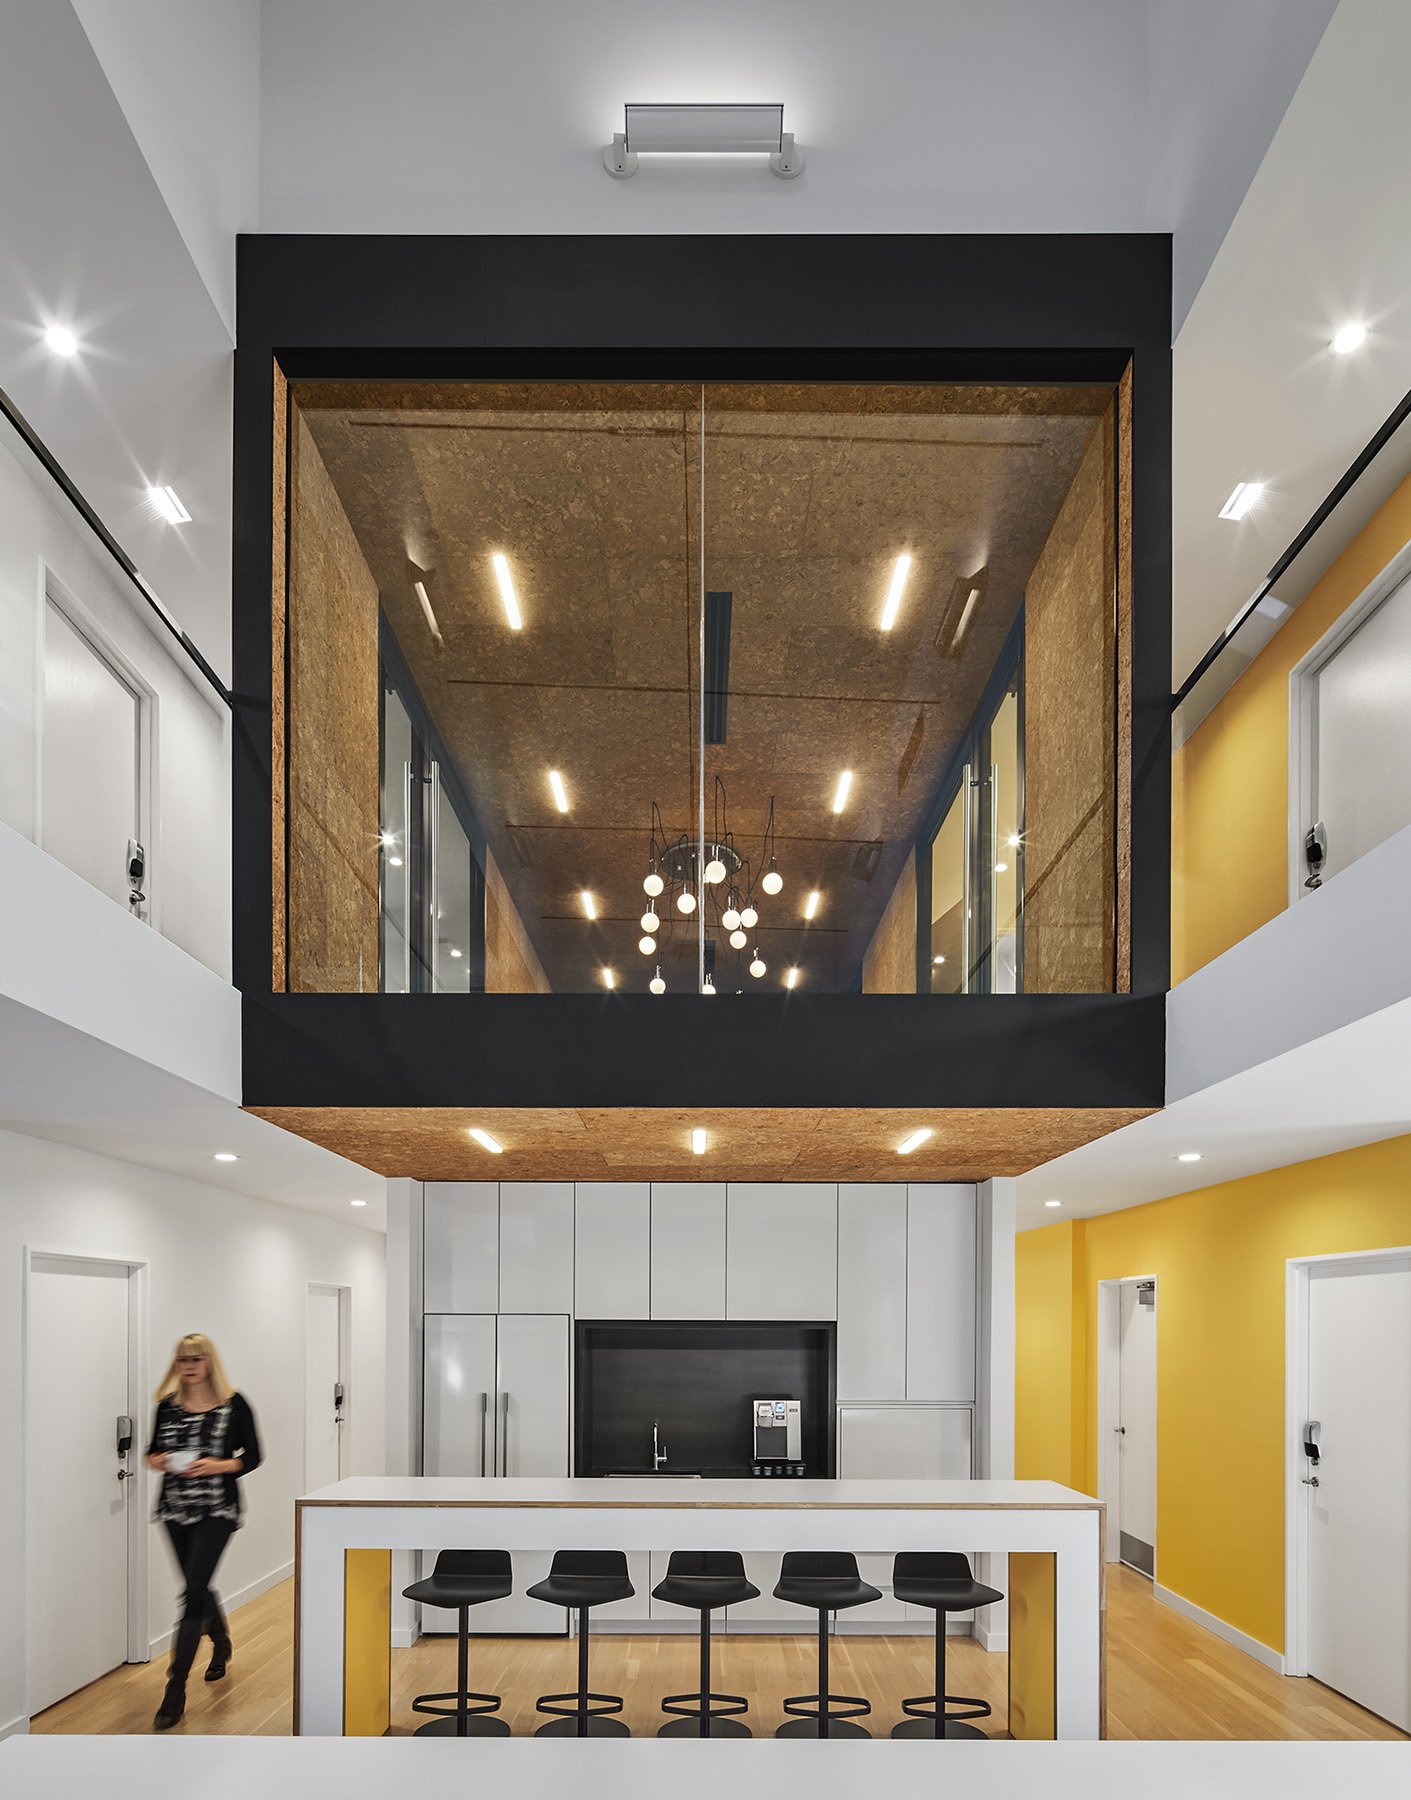 Quinnipiac University / Brand Strategy Group - Amenta Emma Architects